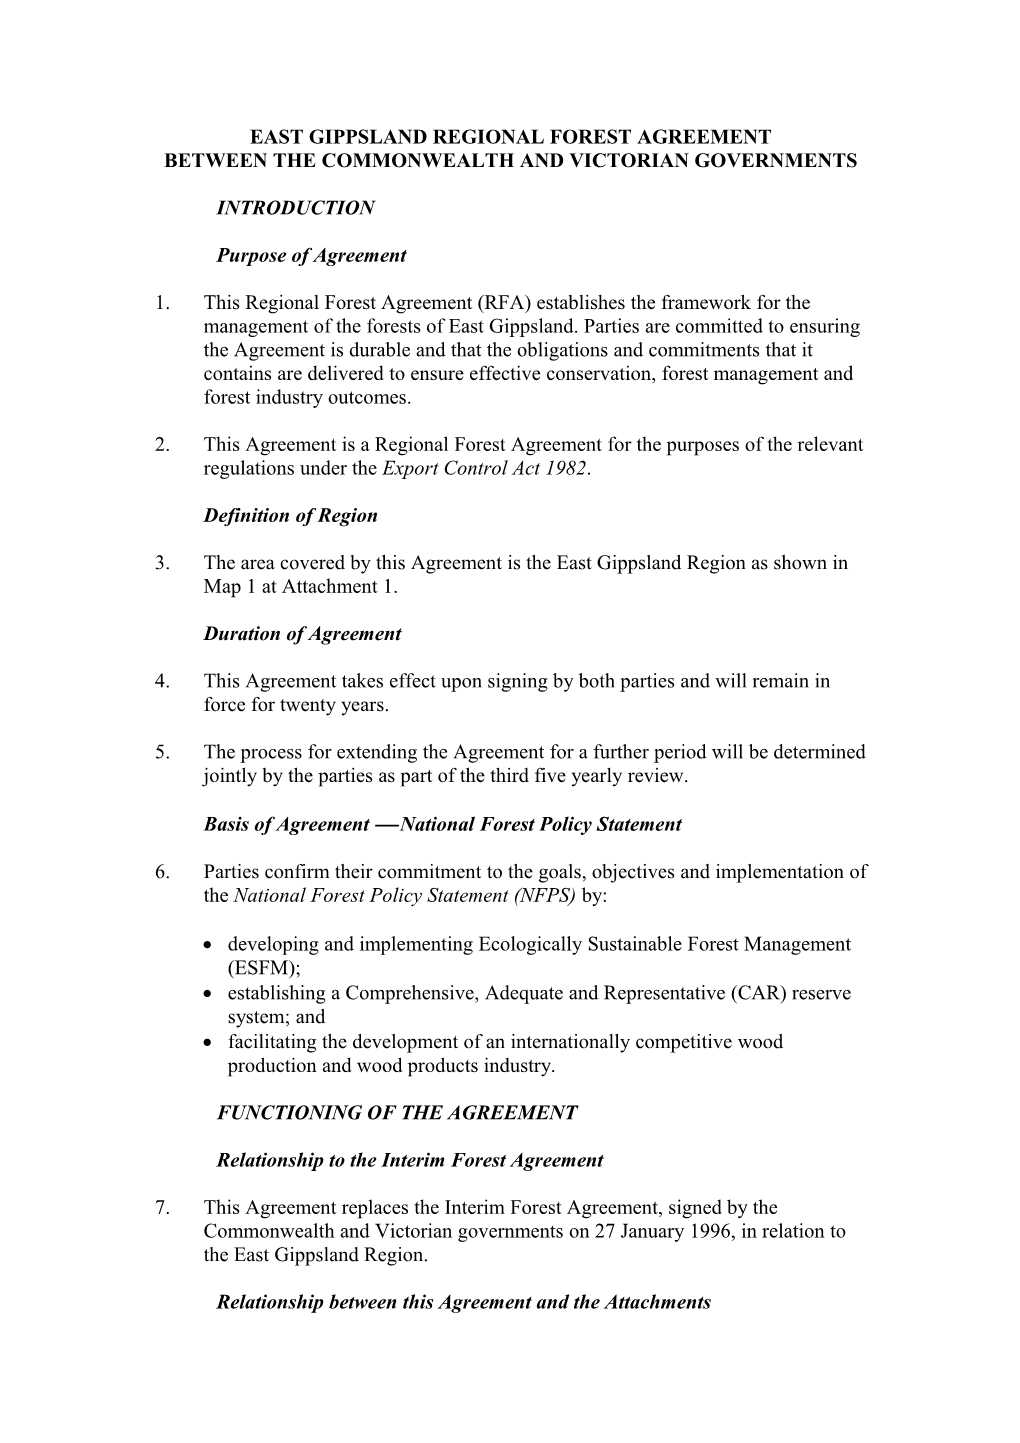 East Gippsland Regional Forest Agreement